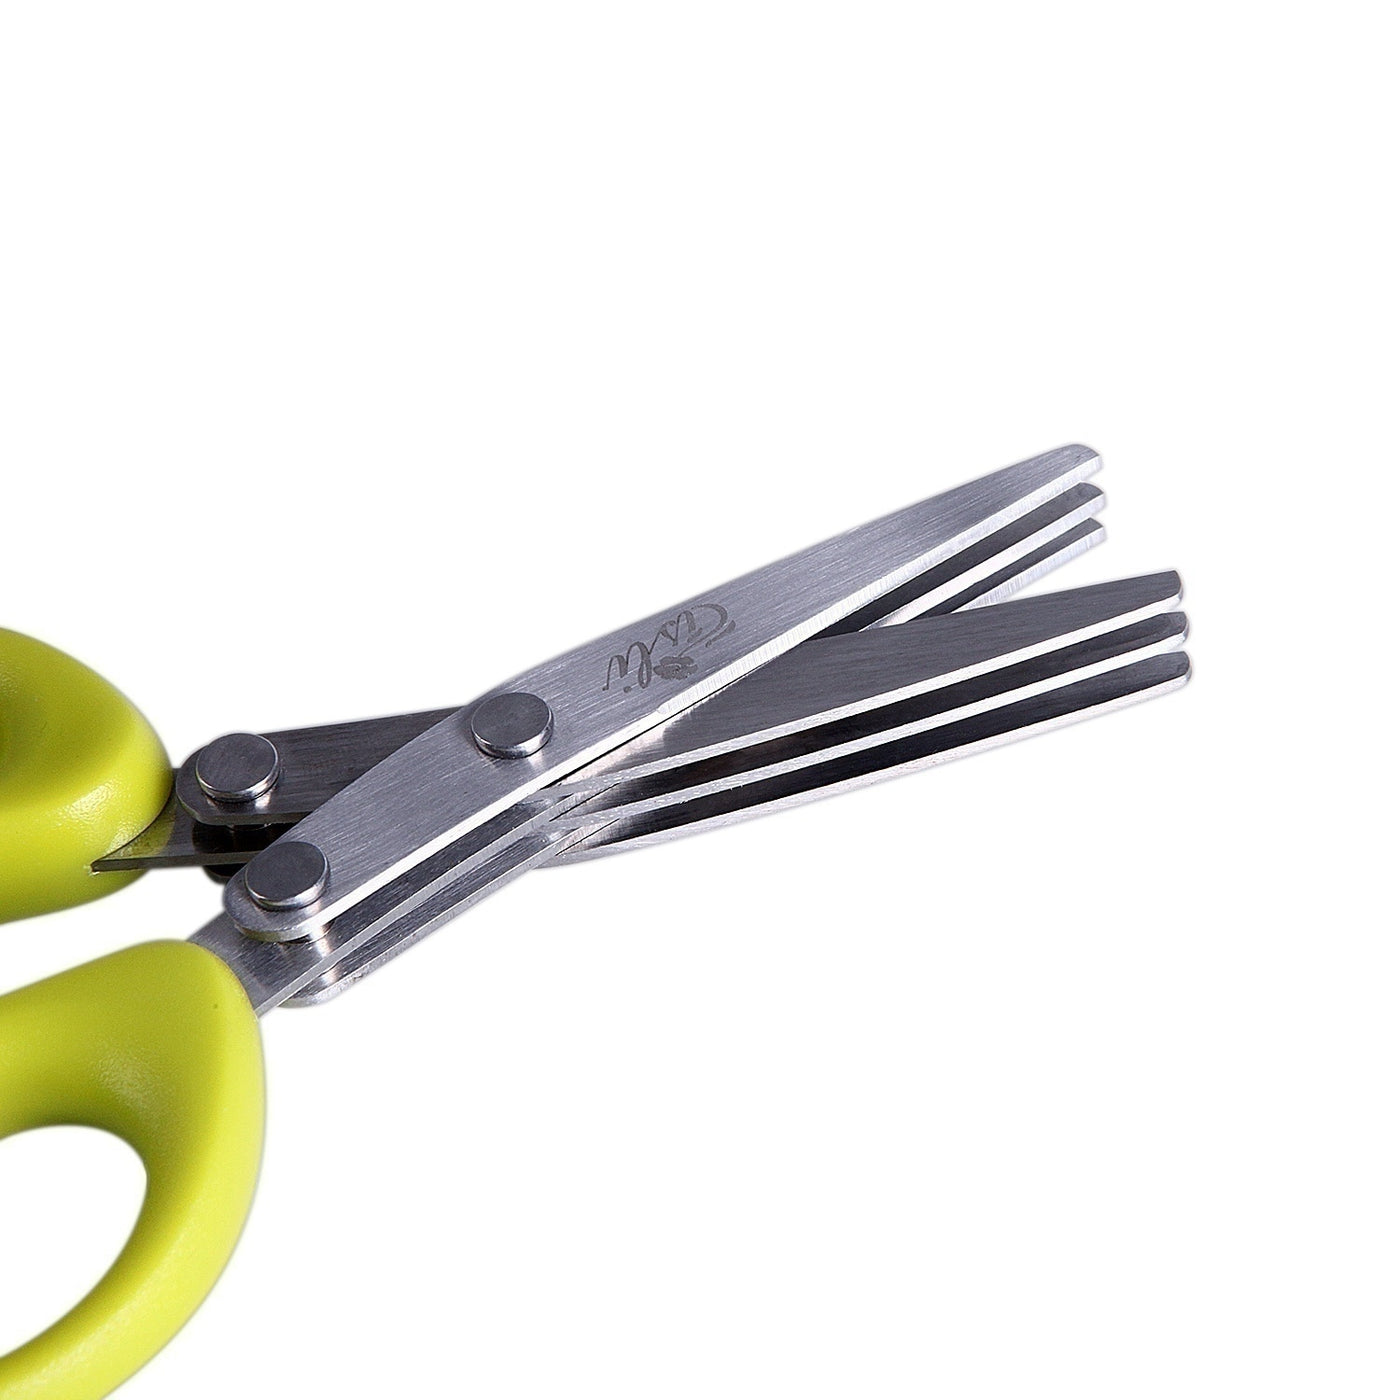 Stainless Steel Multi-Blade Kitchen Scissors